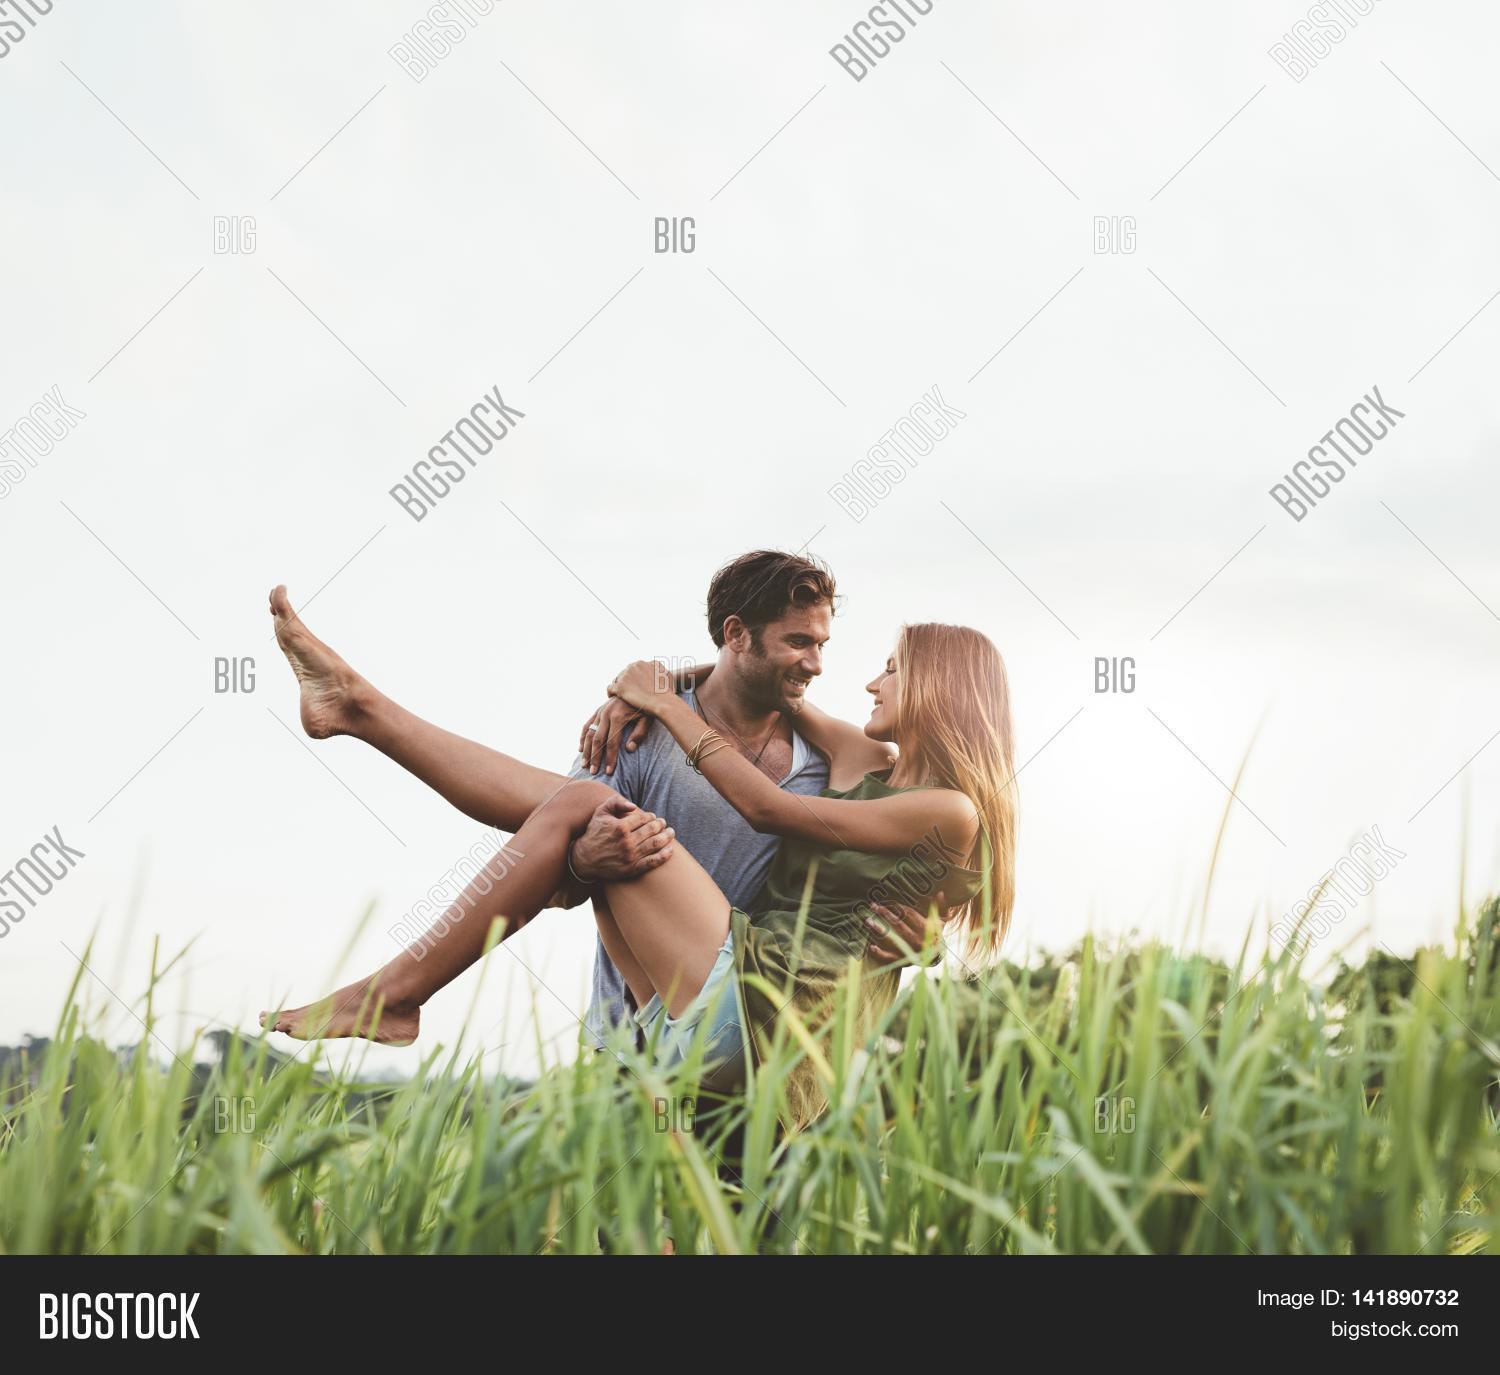 Romantic Man Carrying Woman Field Image & Photo | Bigstock